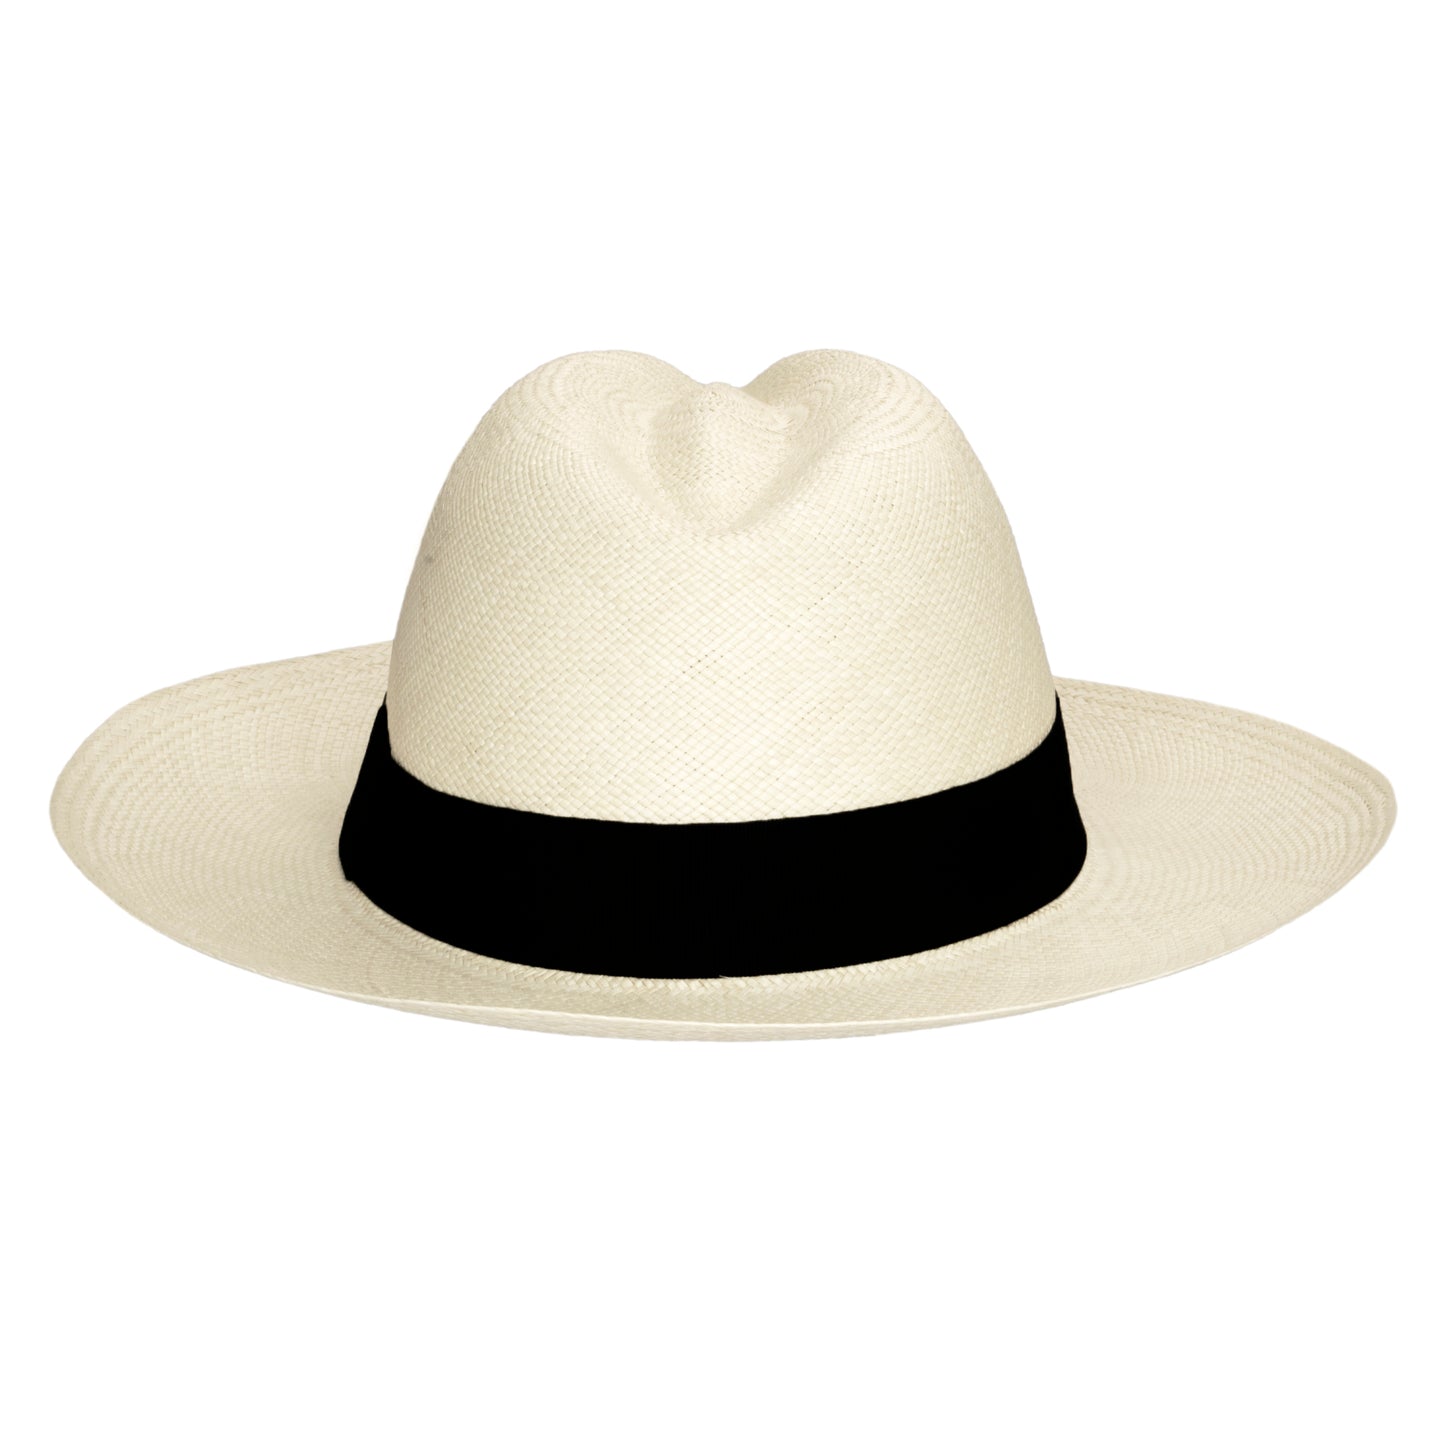 Classic Panama Hat for Women